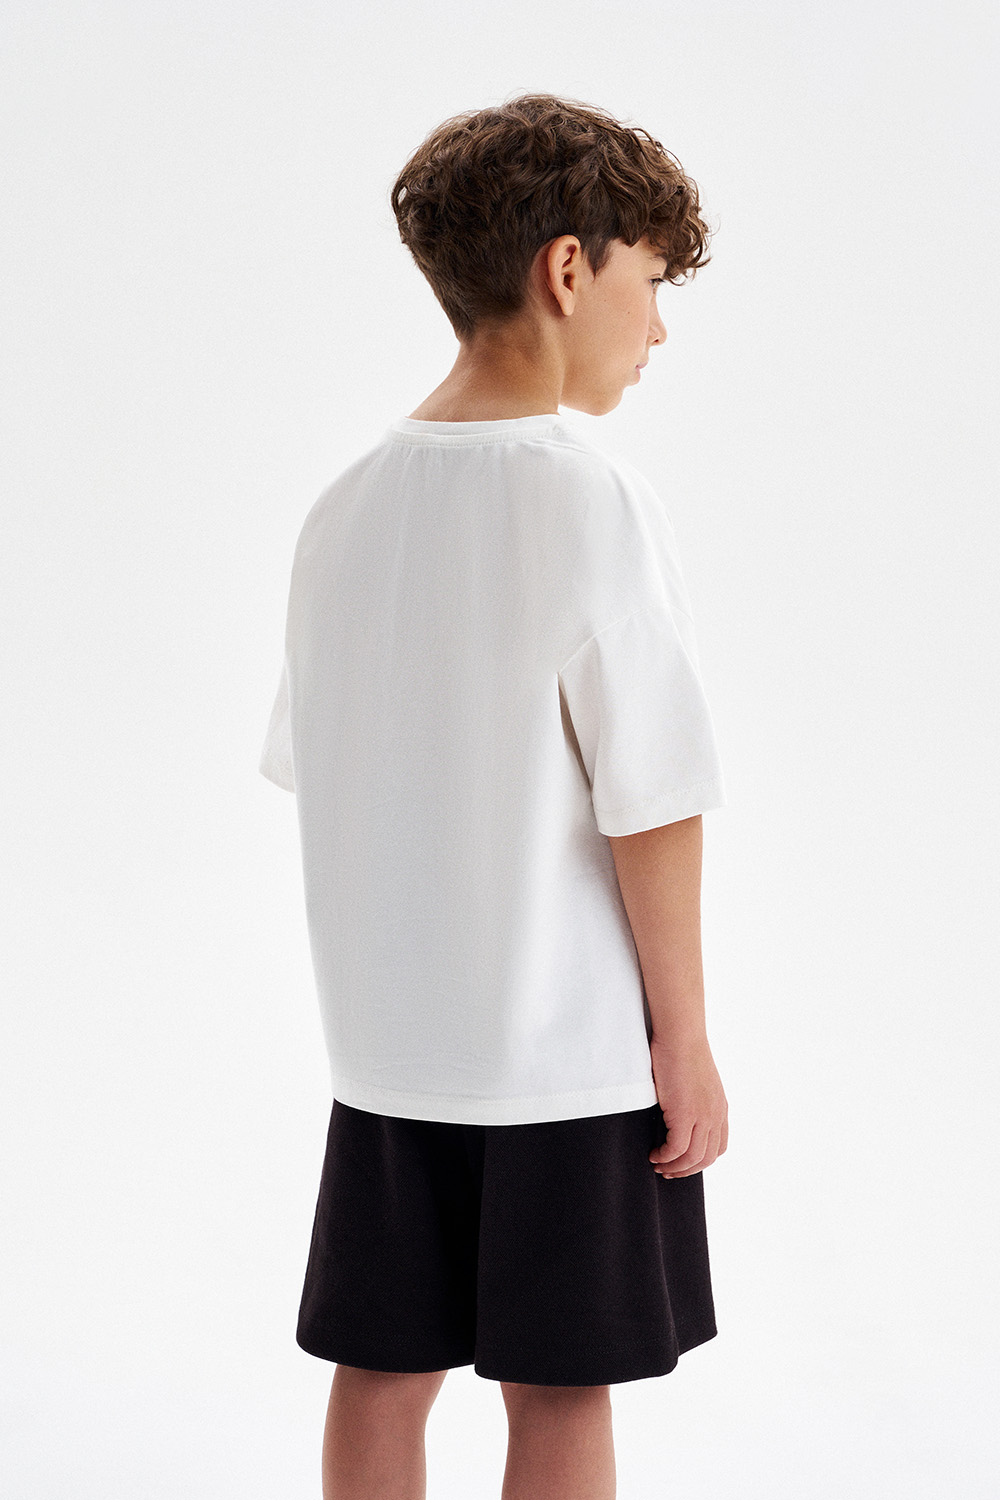 Хлопковая футболка унисекс (PUASU-438-38420-200) Silver spoon